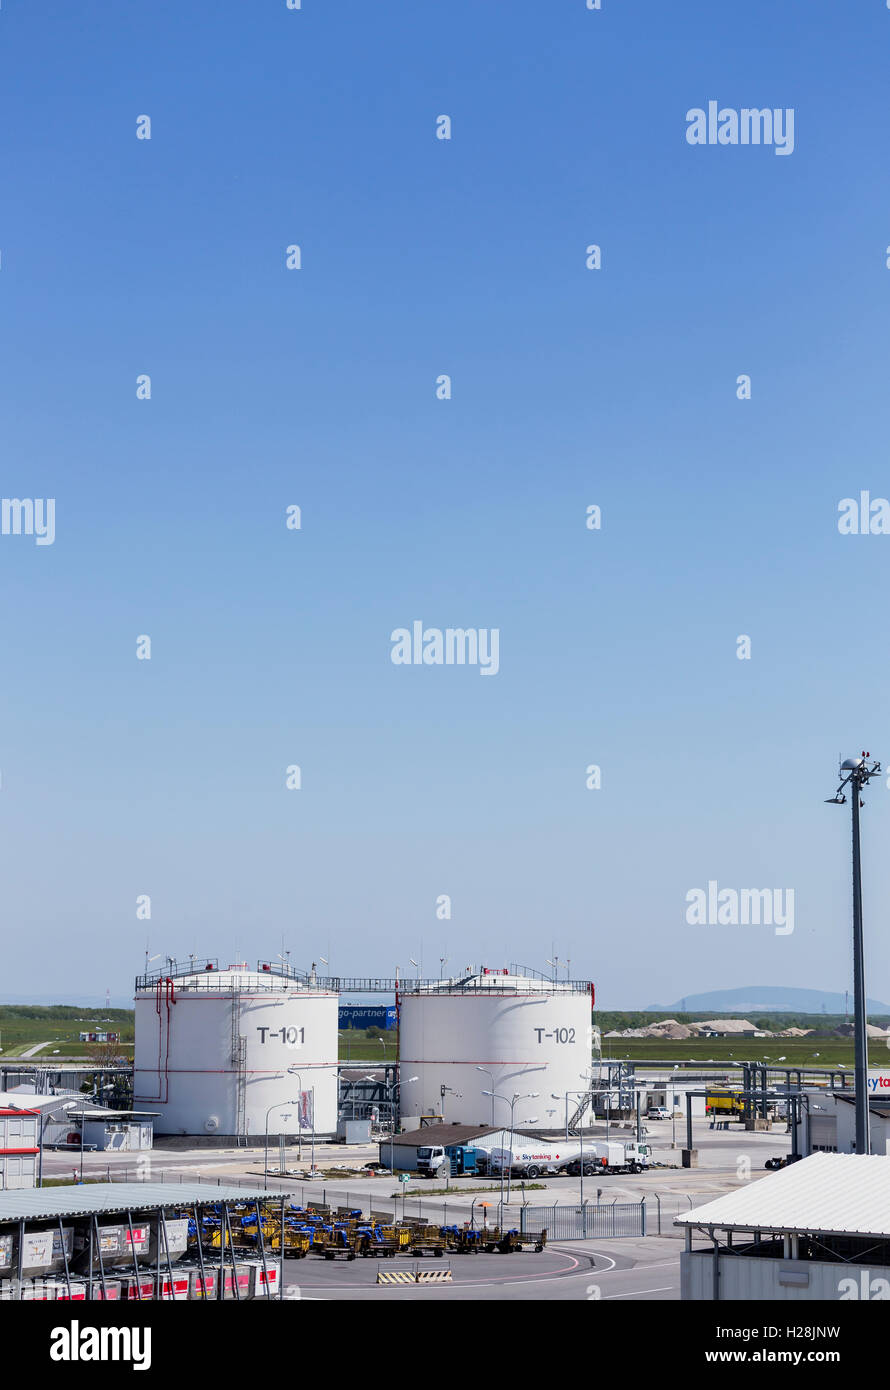 Airport Fuel Storage Tanks Stock Photo